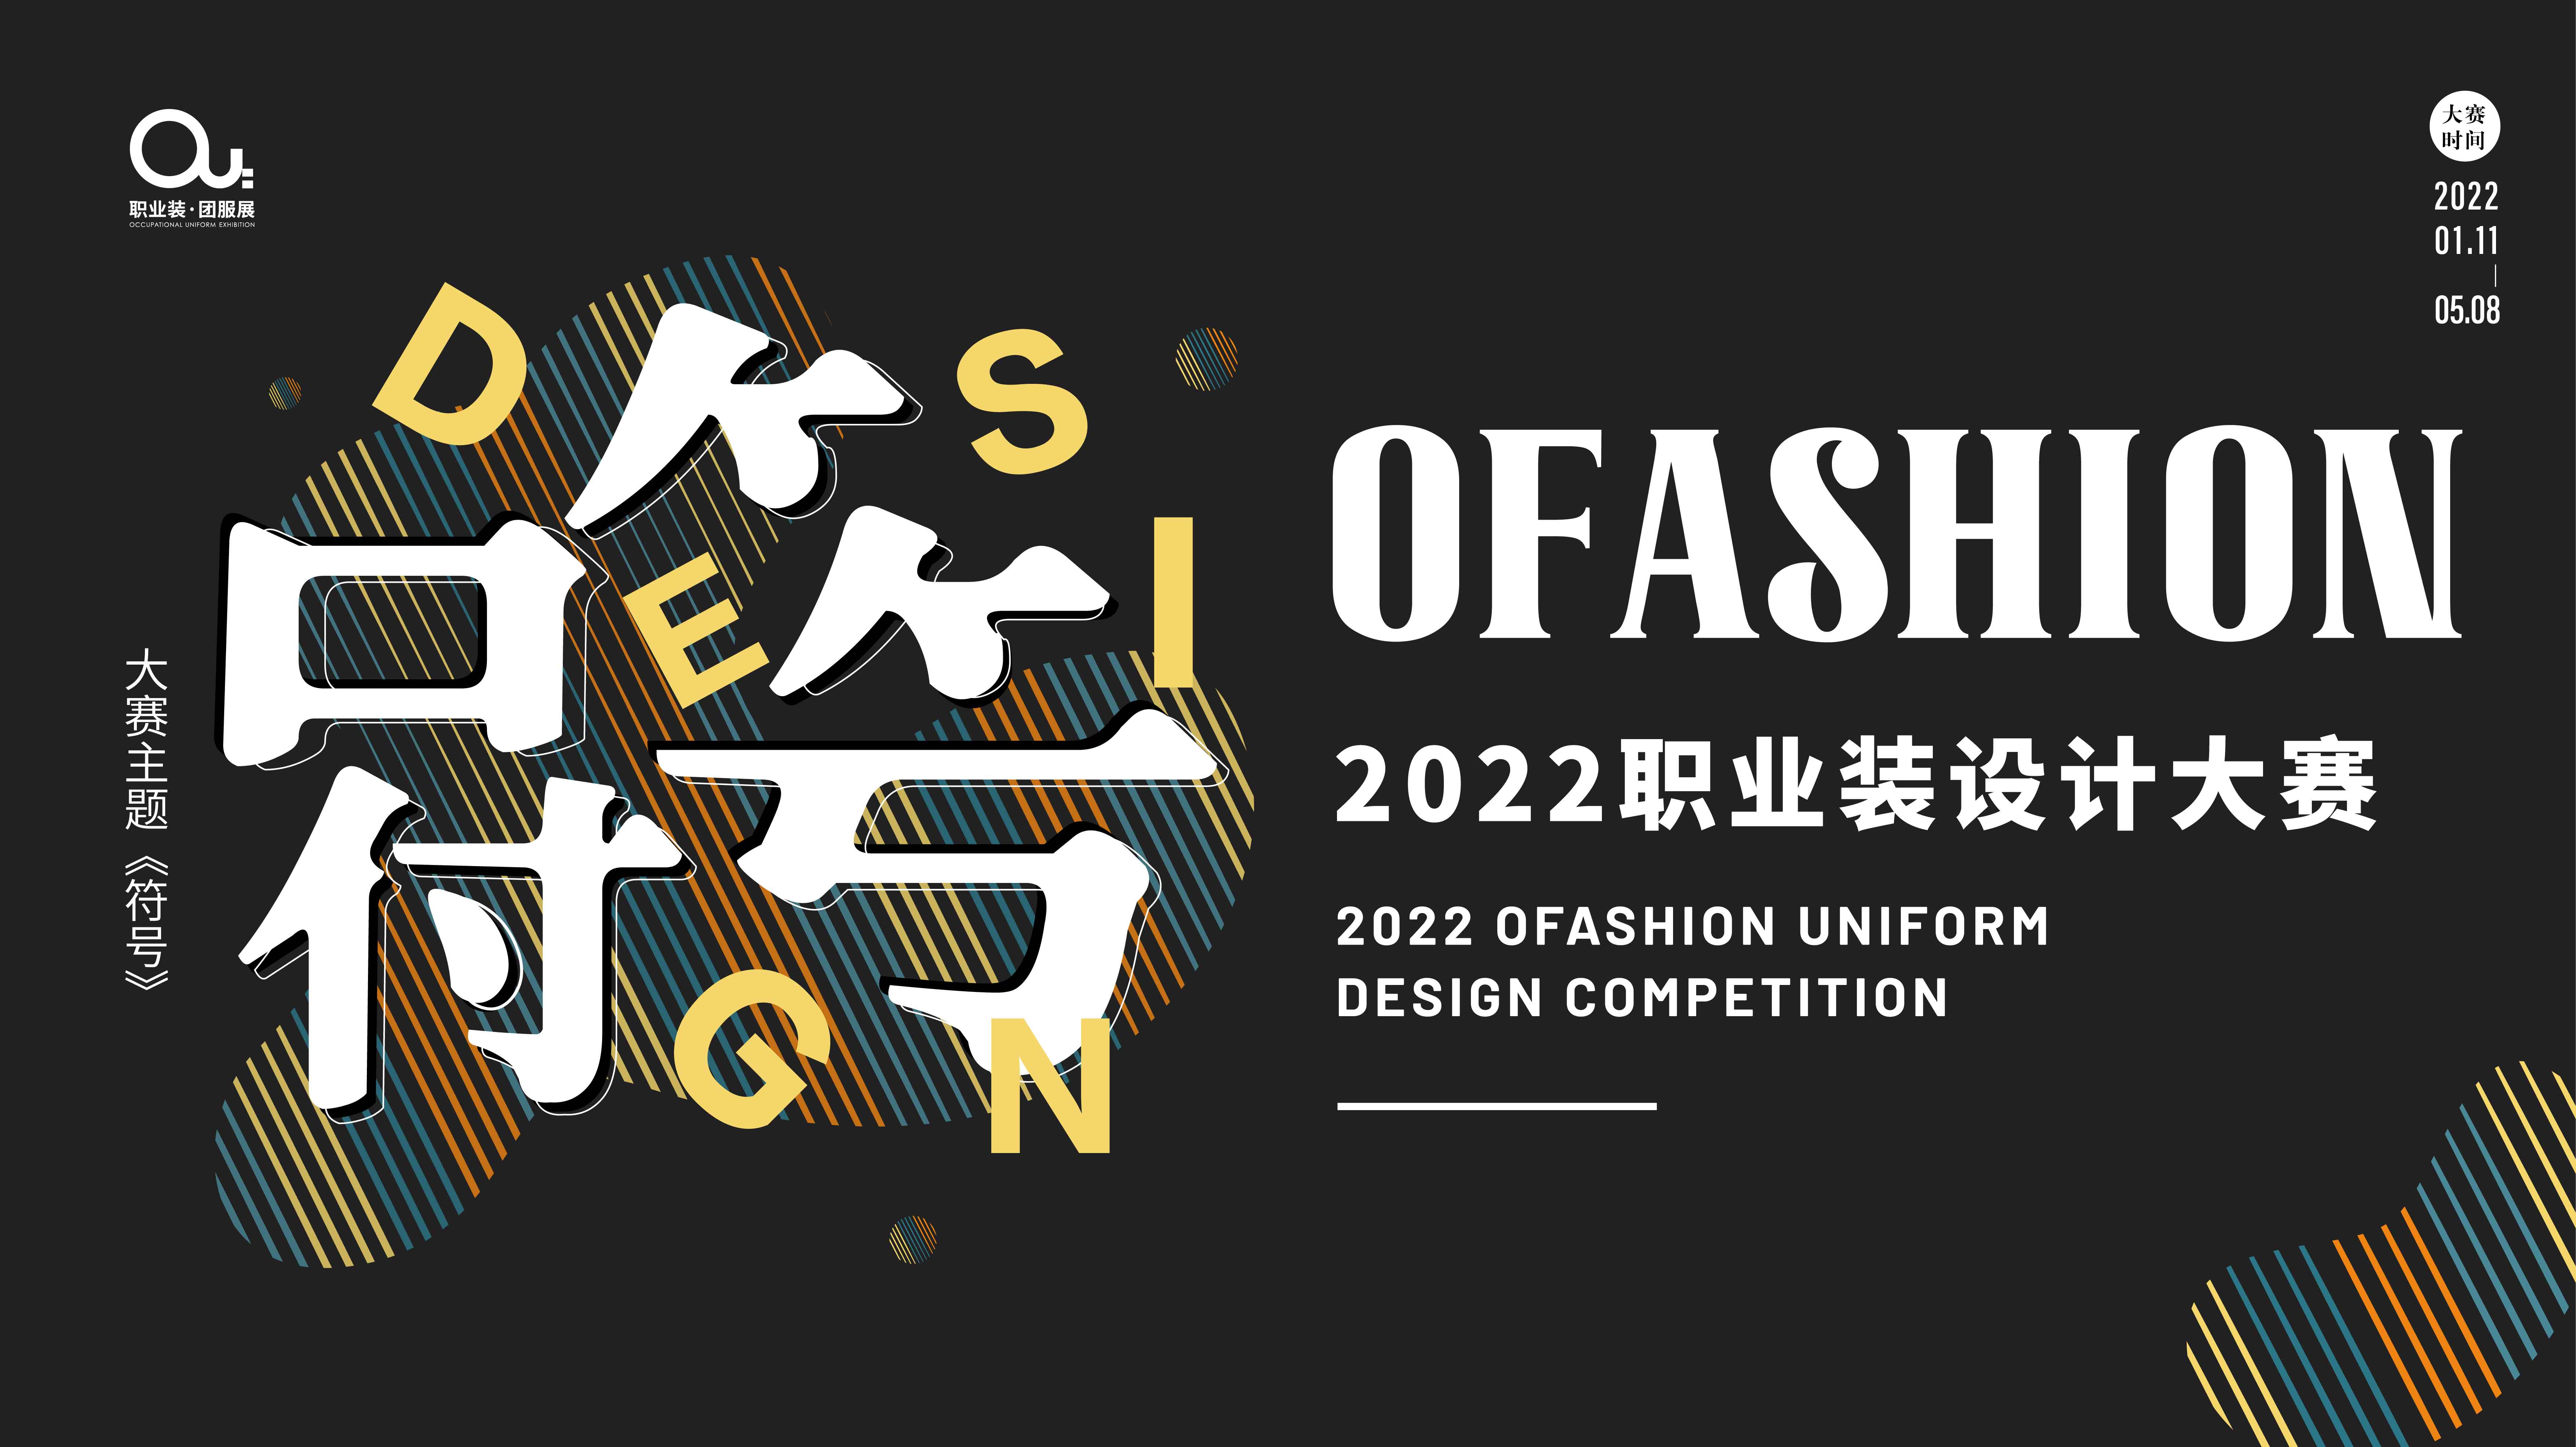 “OFashion 2022”职业装设计大赛